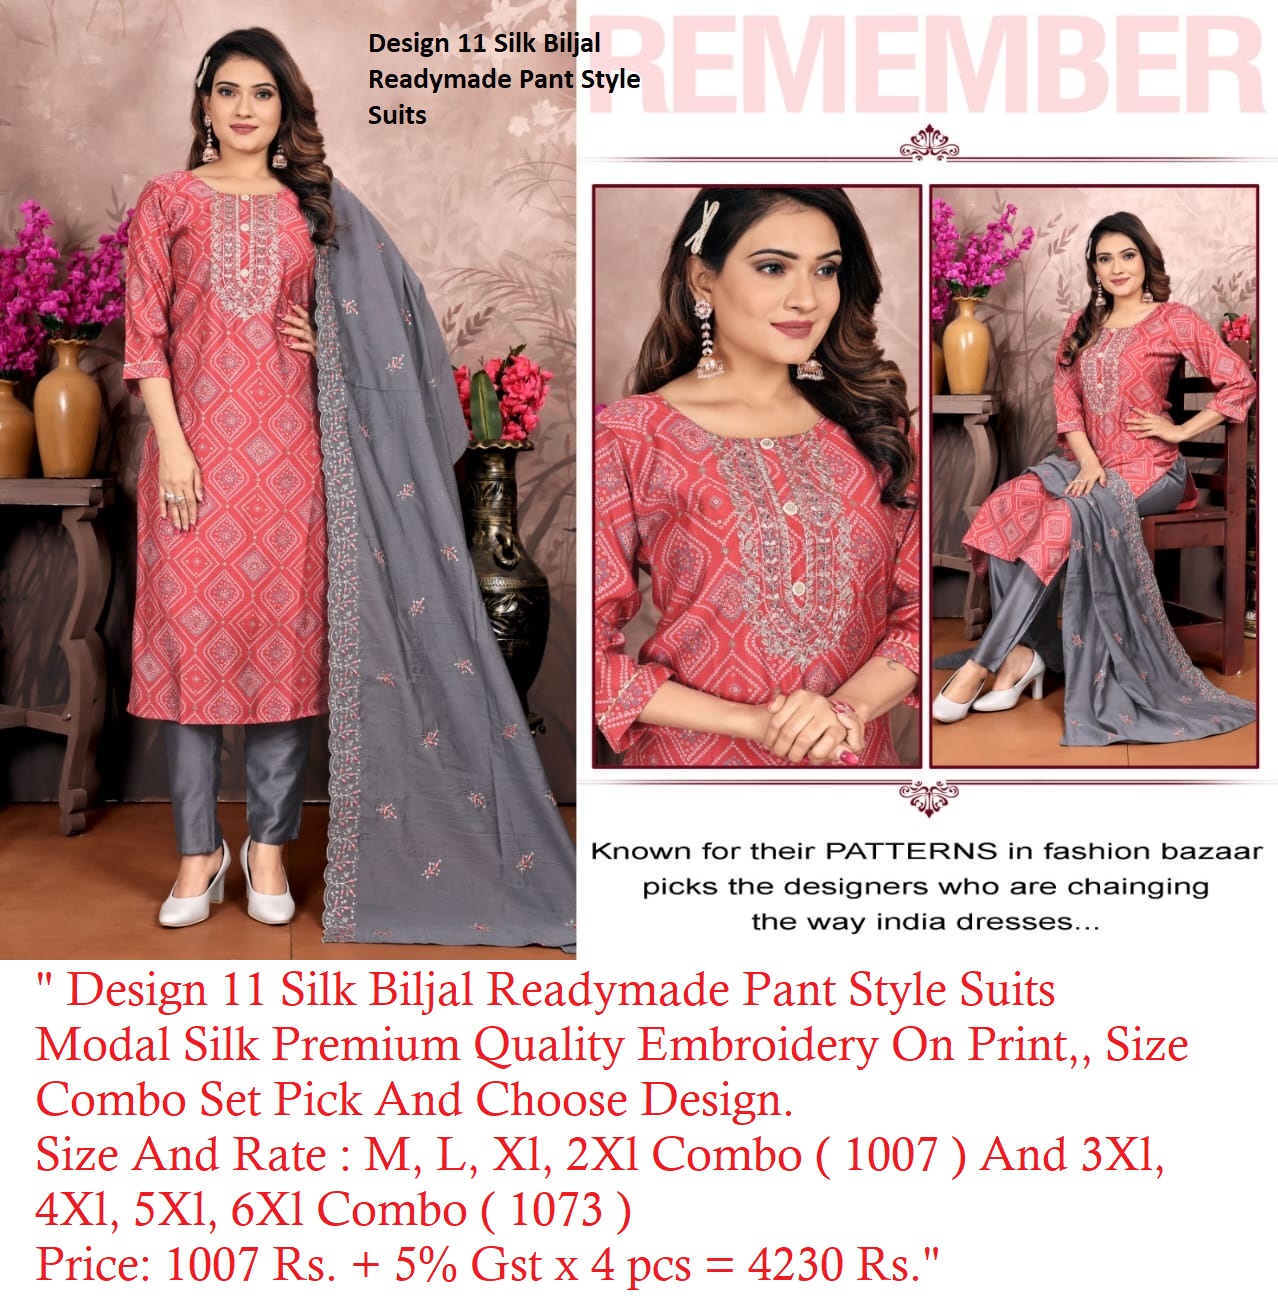 Biljal Design 11 Silk Readymade Pant Style Dress Catalog Lowest Price